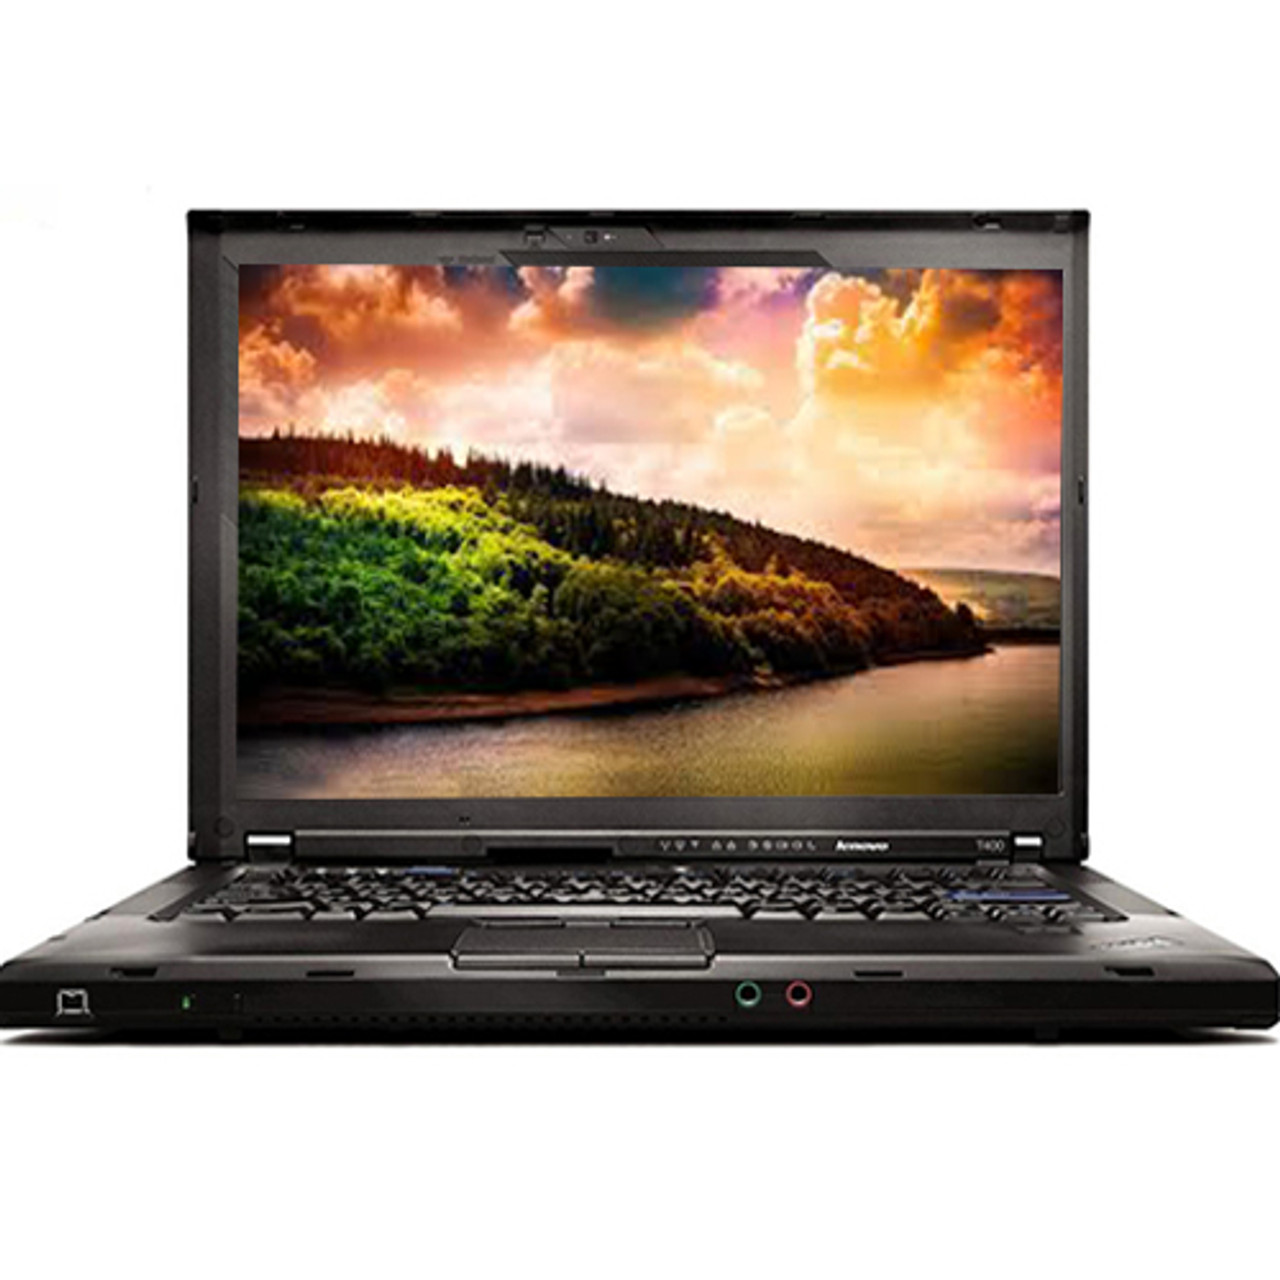 Lenovo ThinkPad Laptop Computer T430 14" Intel Core i5-3320m 2.6GHz 8GB 256GB Windows 10-64 Pro WiFi